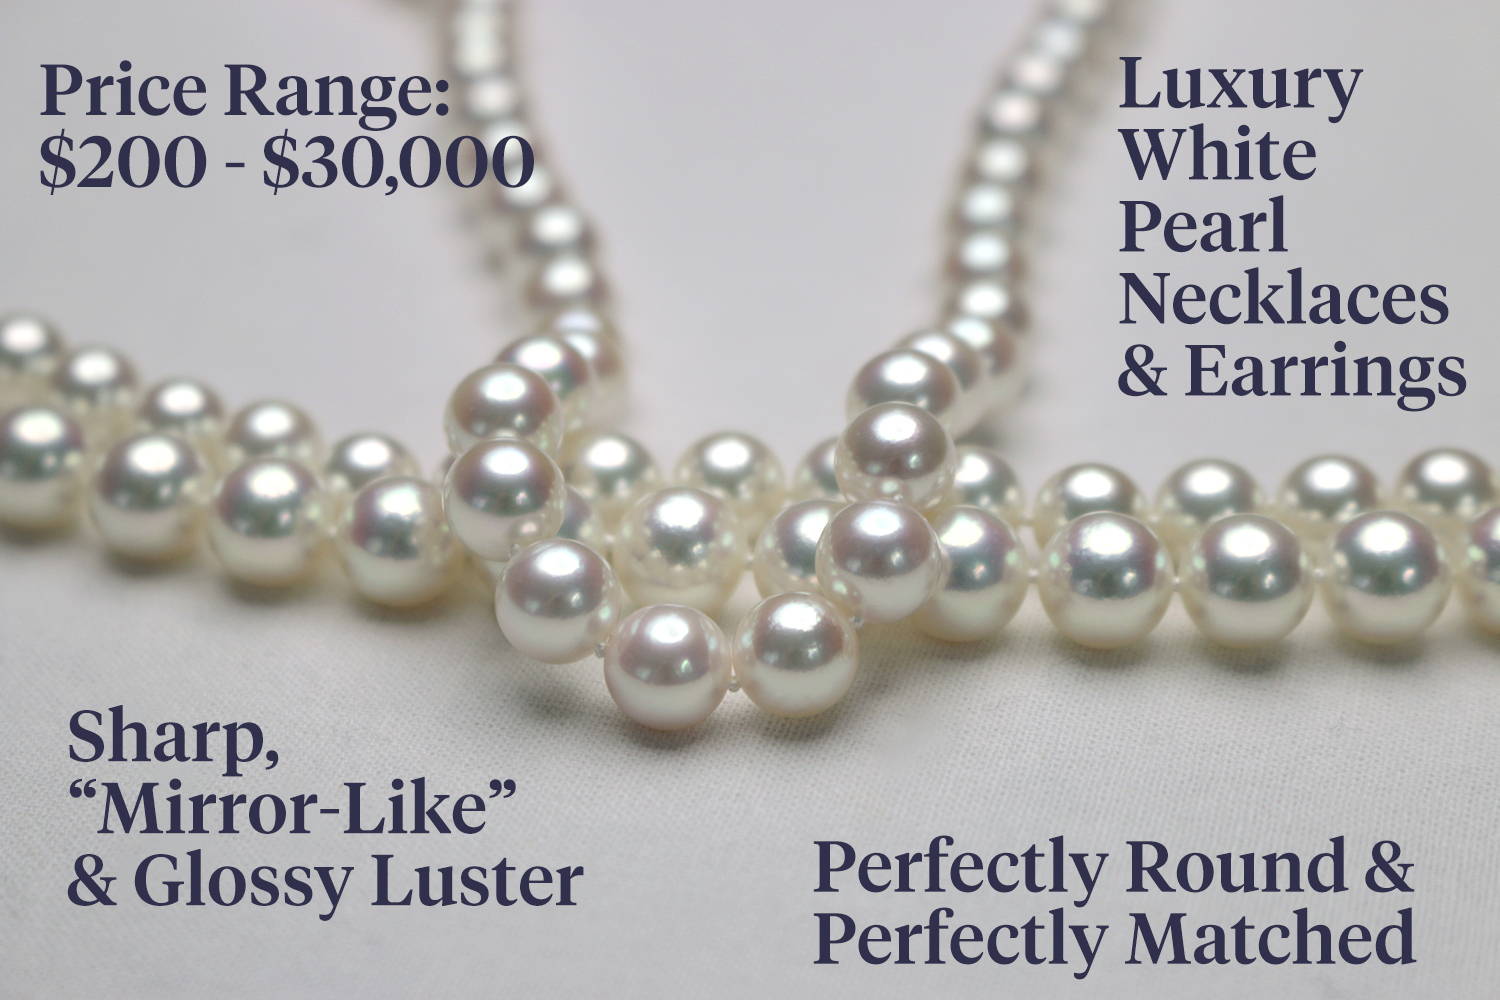 Reasons to buy Akoya pearls